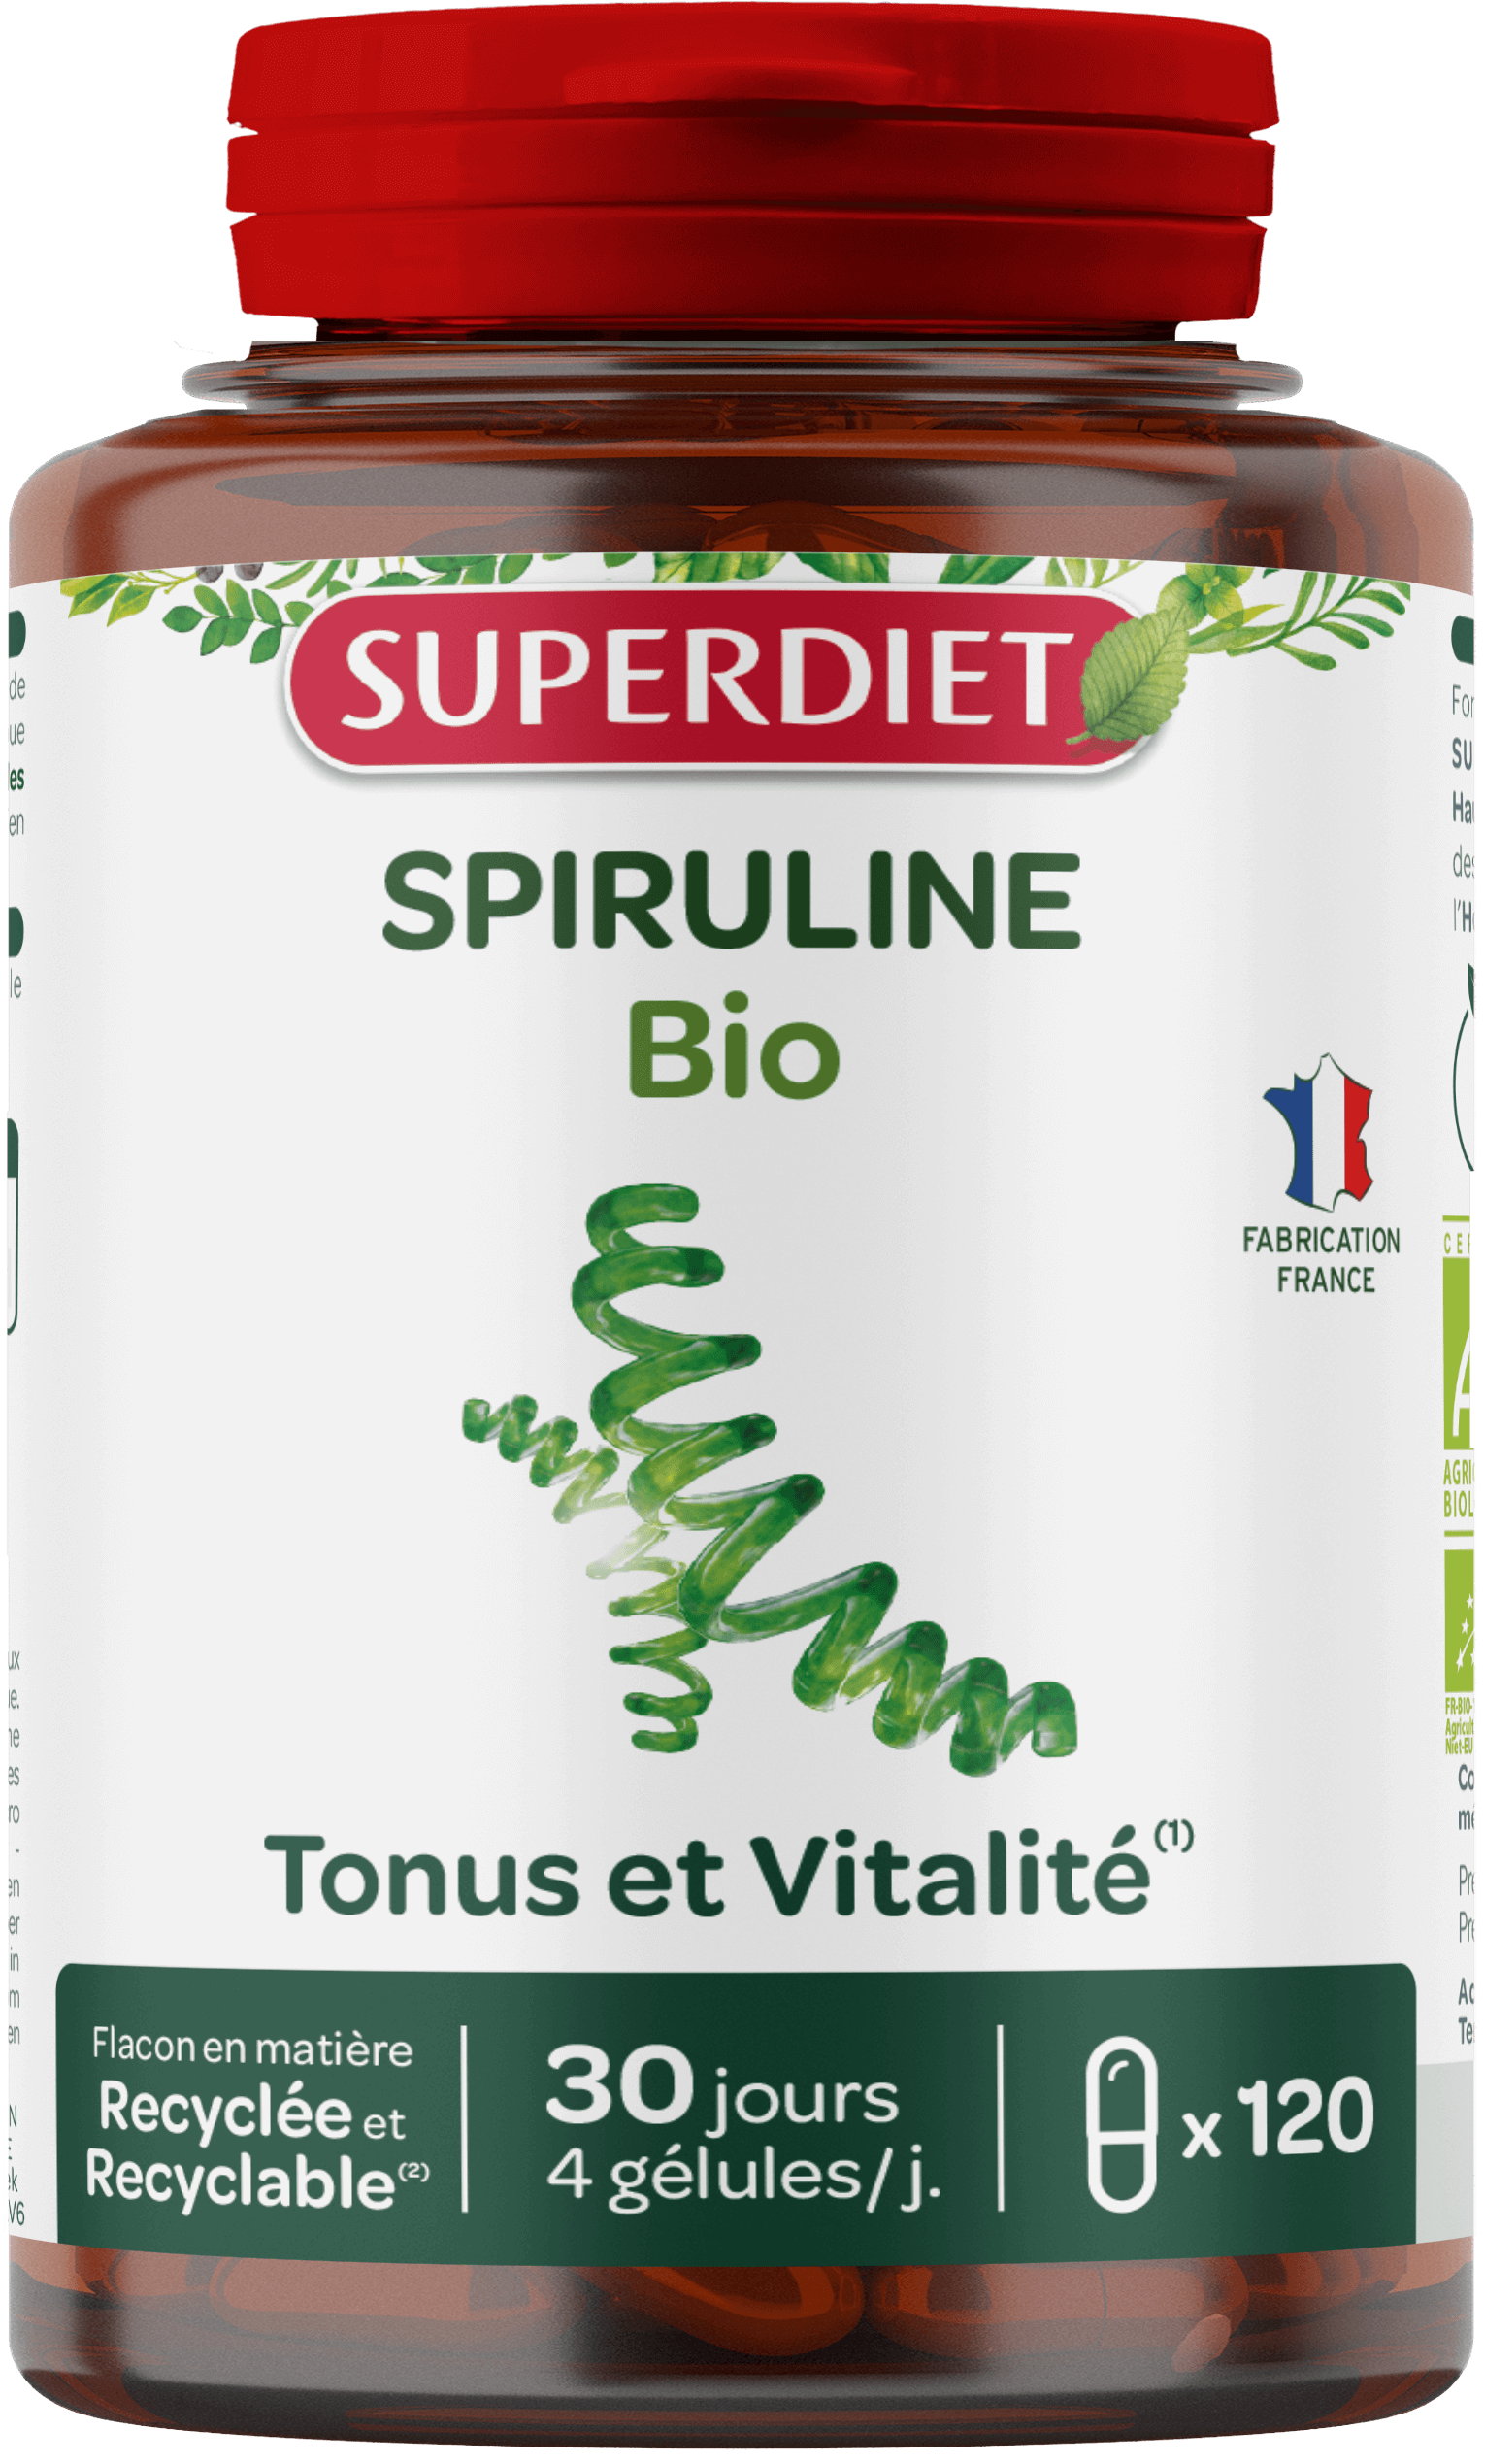 Super Diet Spiruline bio 120caps PL 483/354